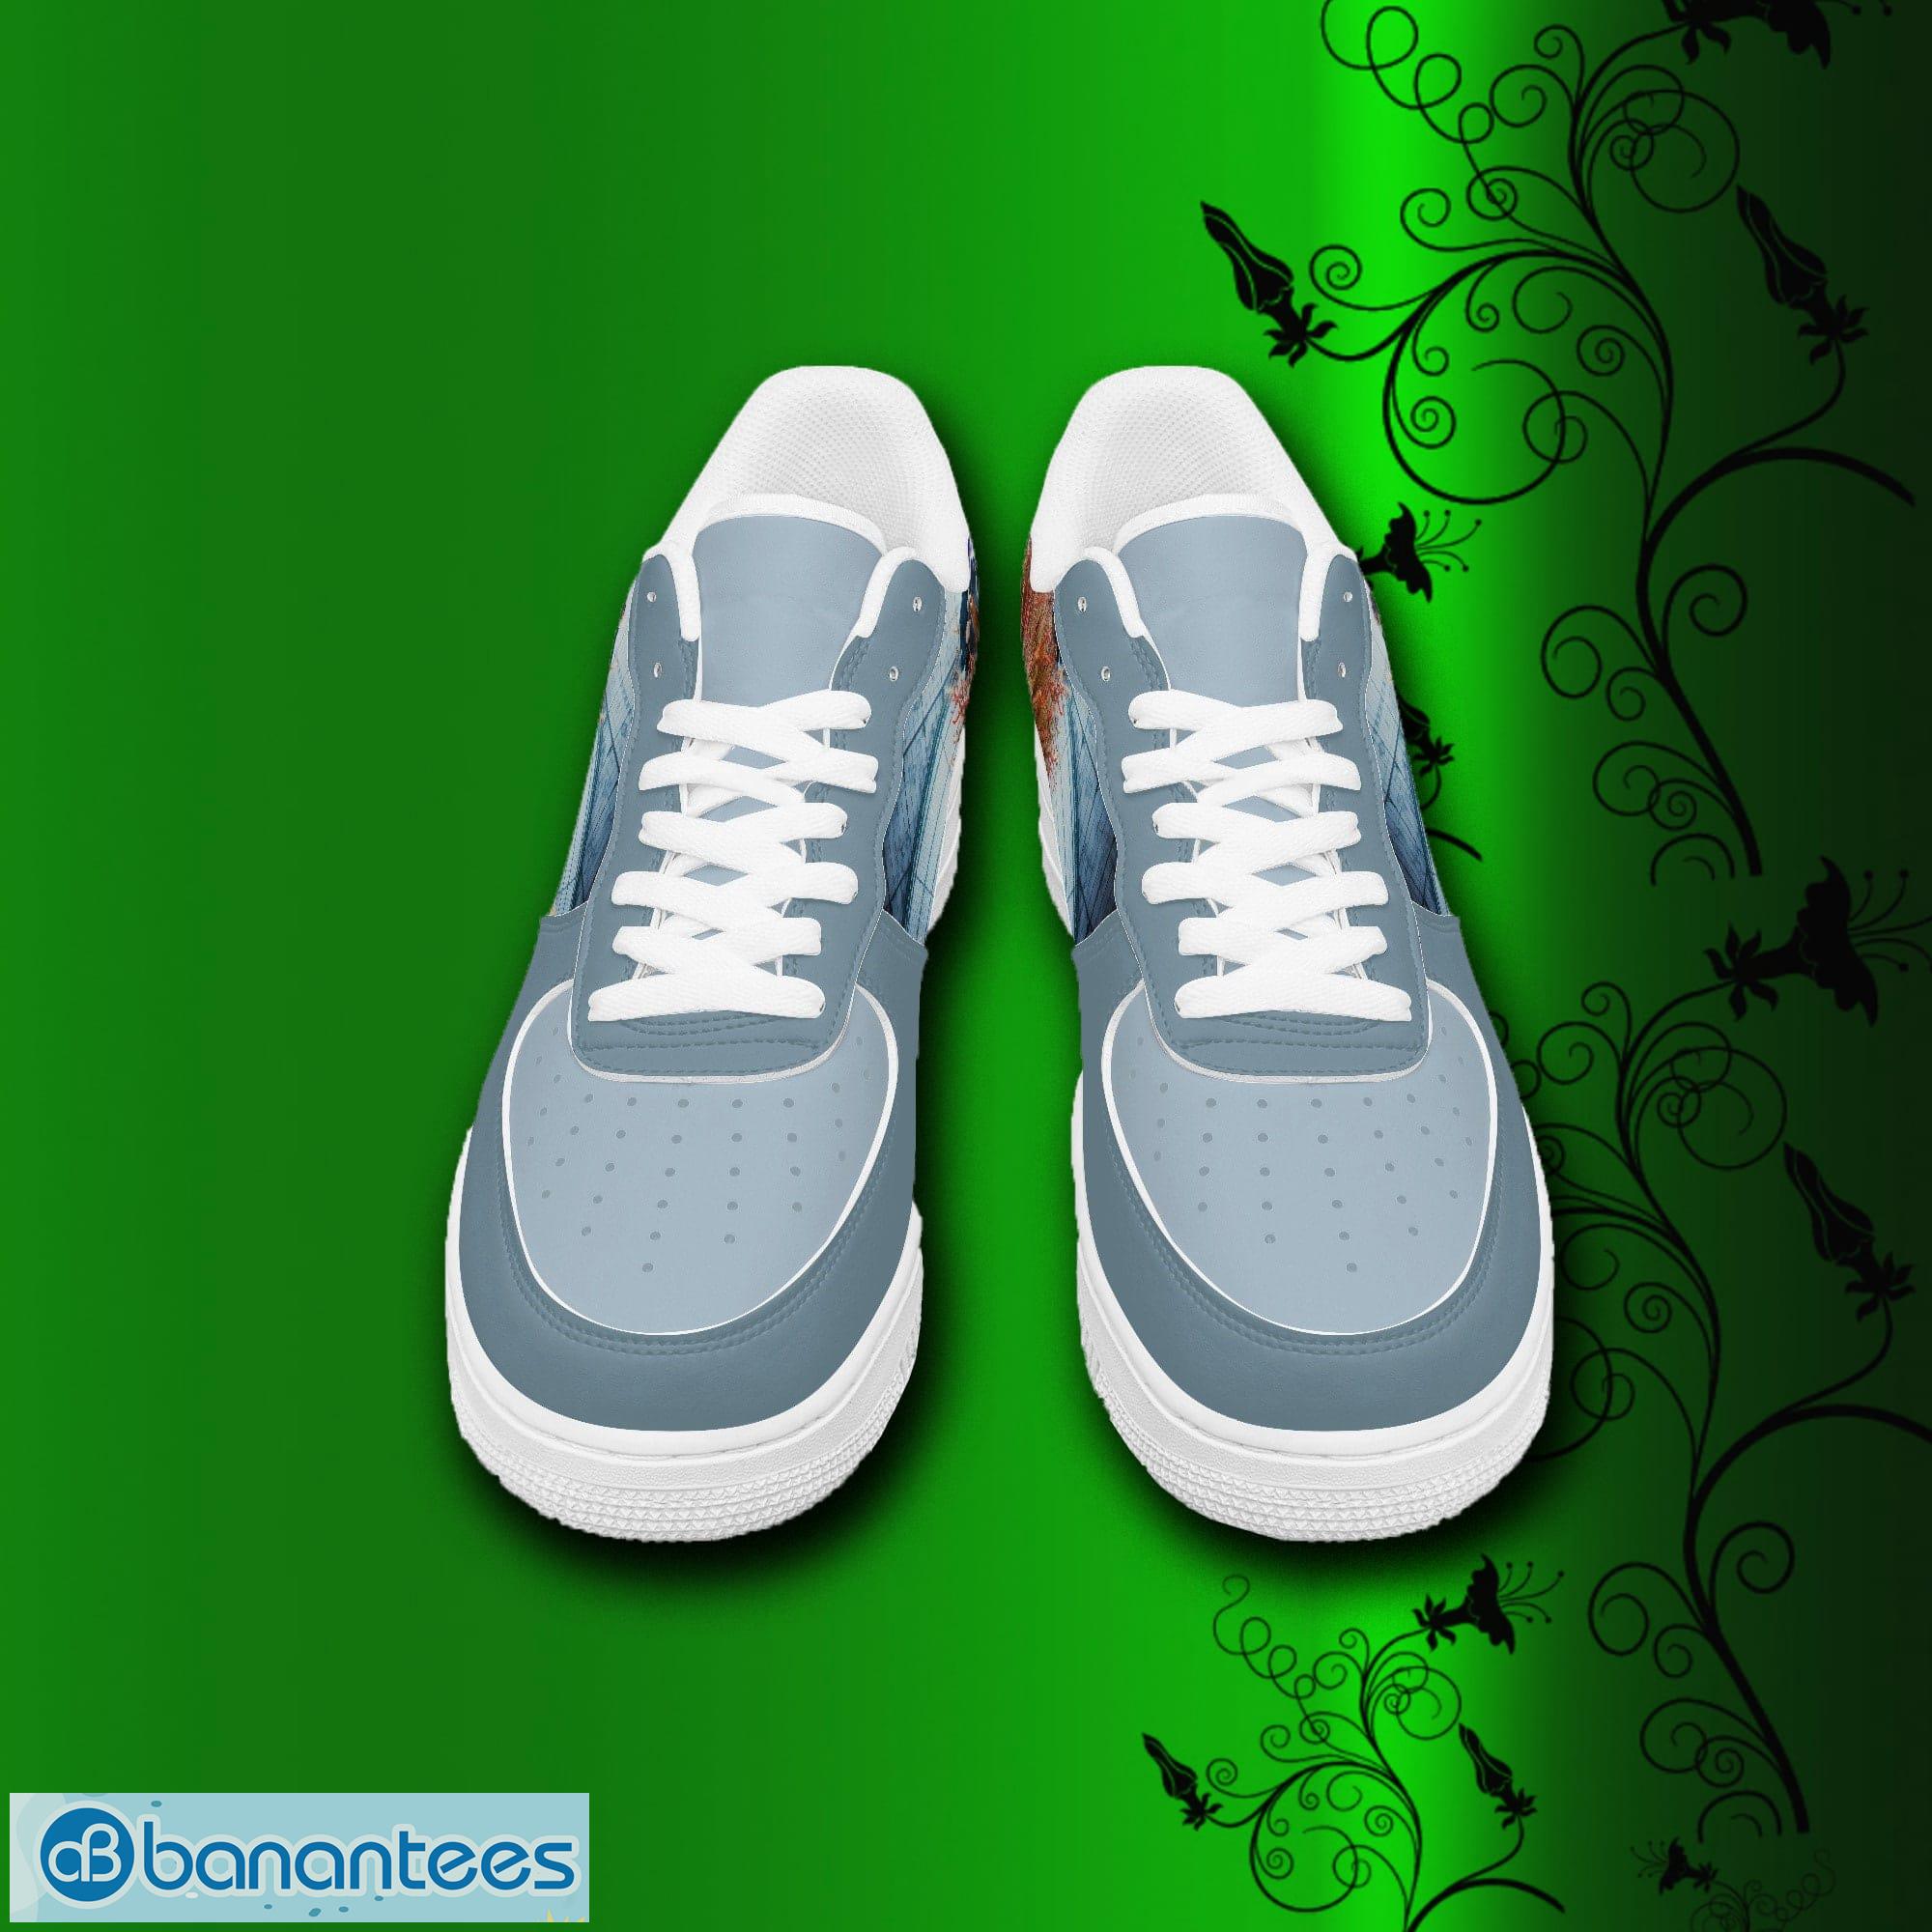 Nike Air Force 1 Low Custom Green / Green Swoosh Unisex Shoes for Men Women